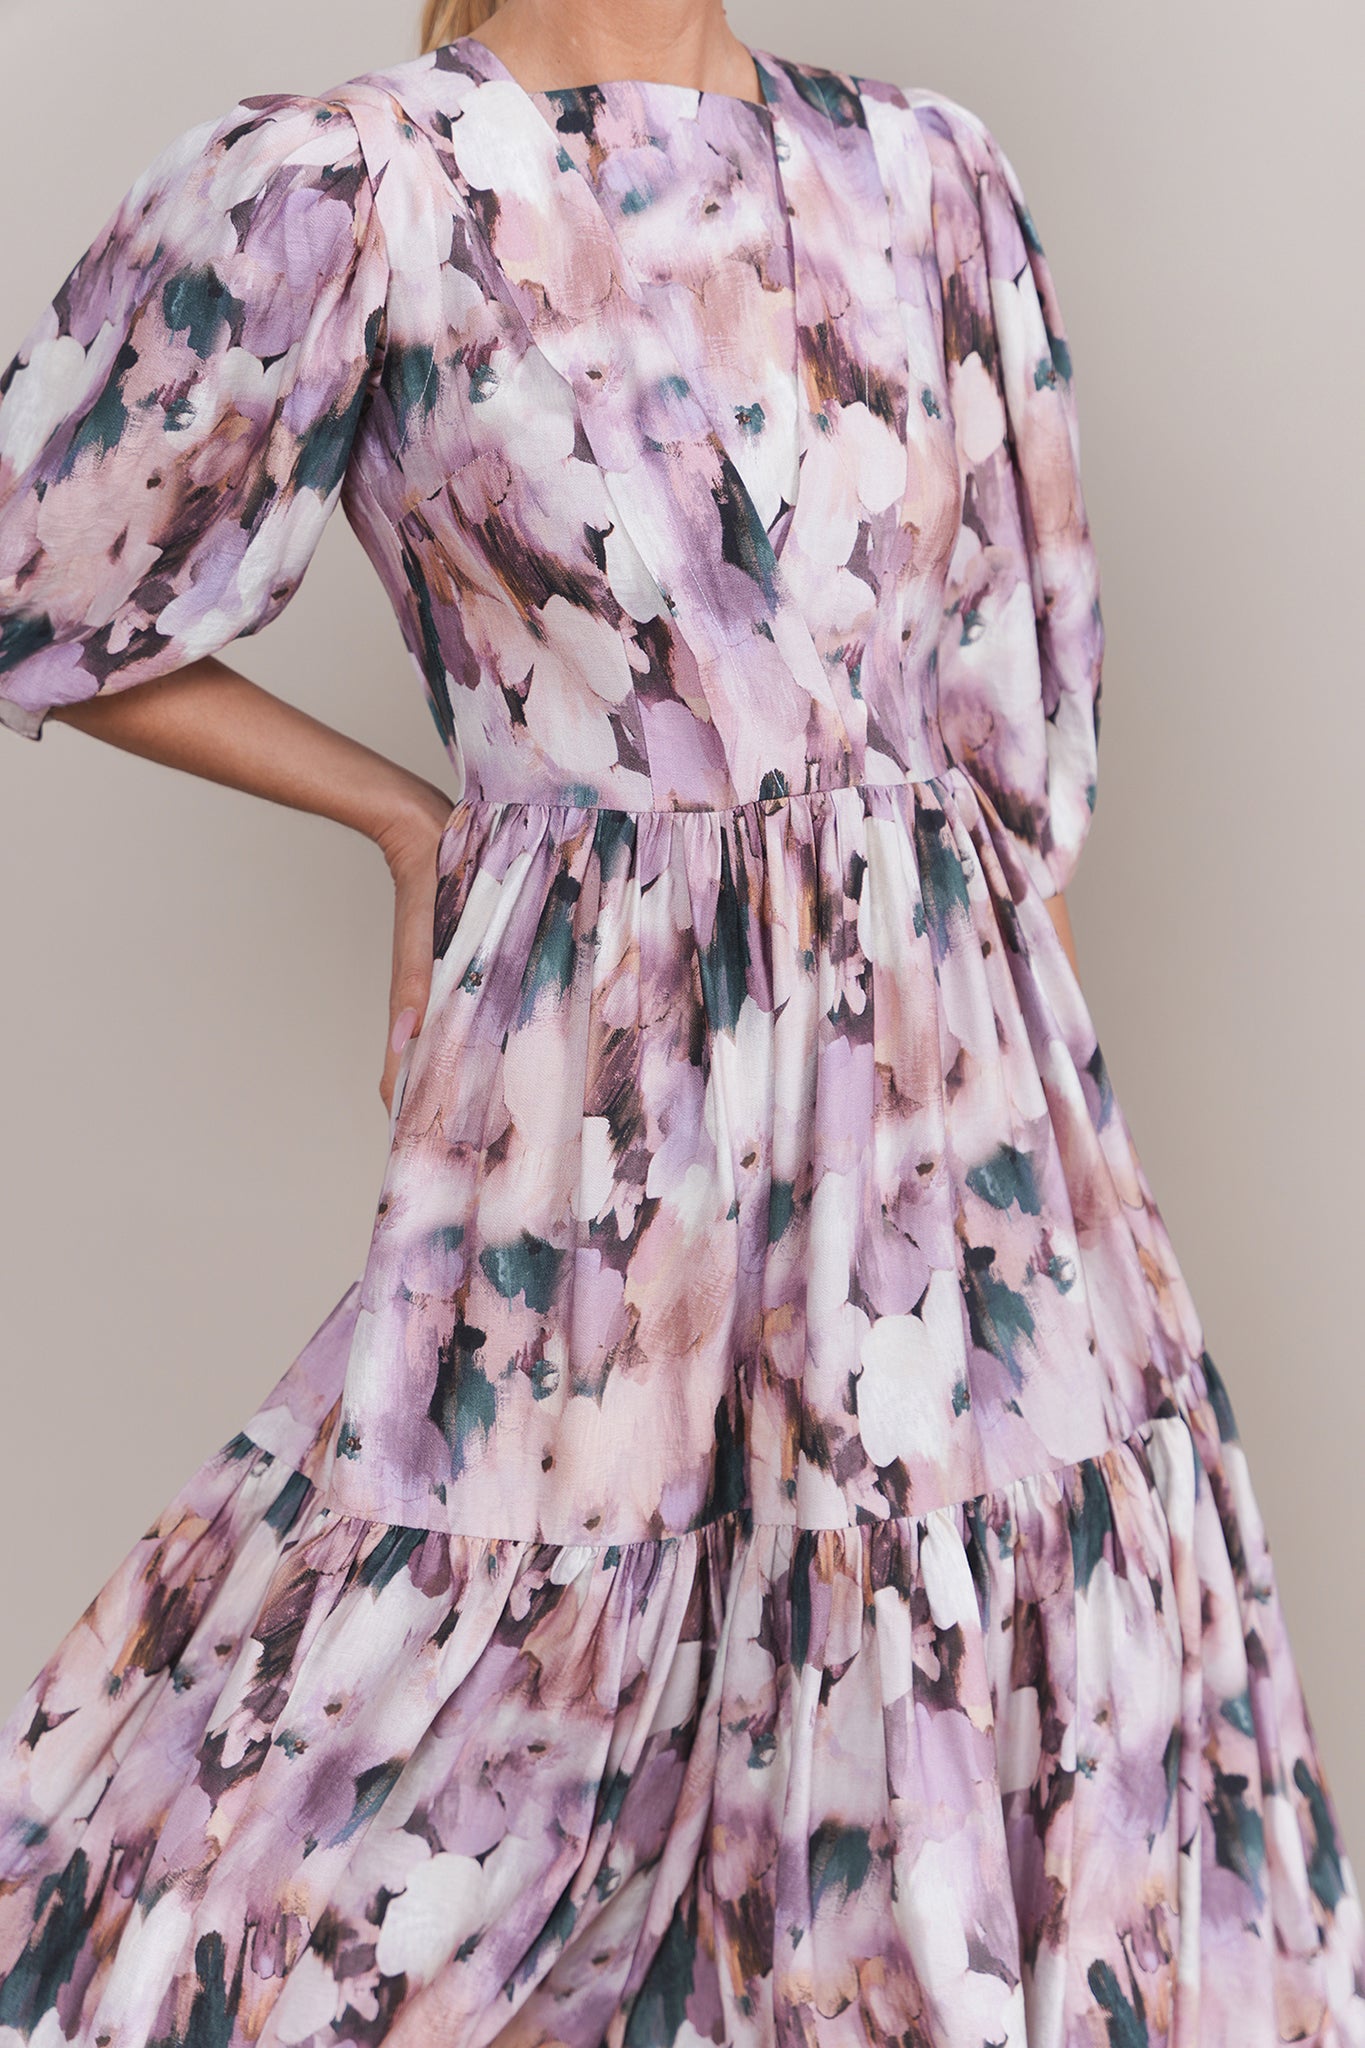 Ellie Convertible Dress in Lavender Mix Floral